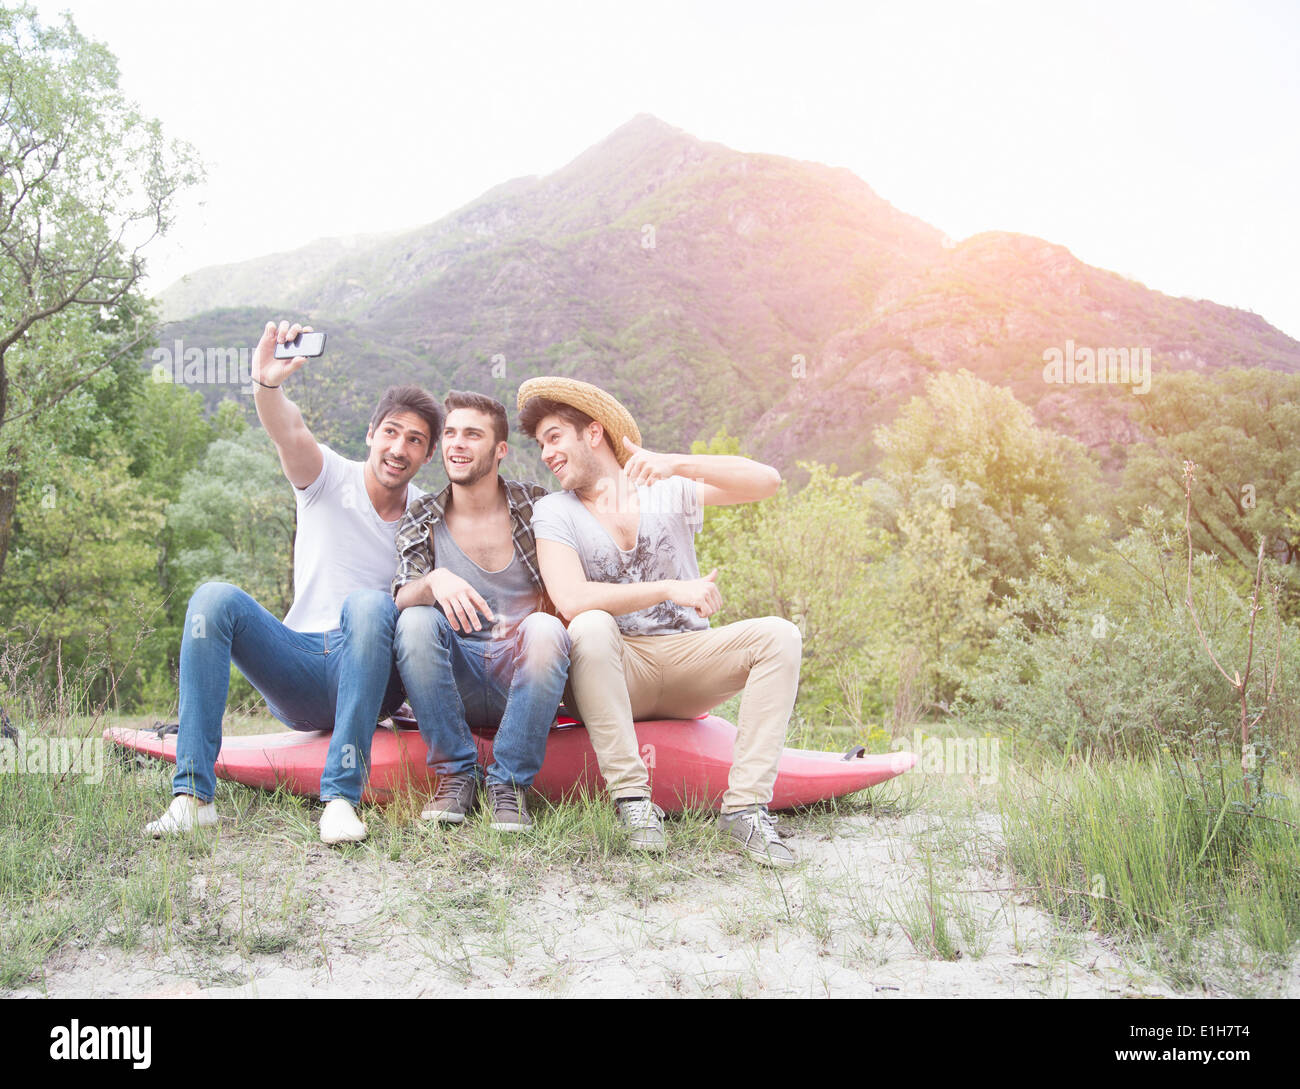 Drei junge Männer sitting on Top of Kanu, Selbstporträt Foto Stockfoto